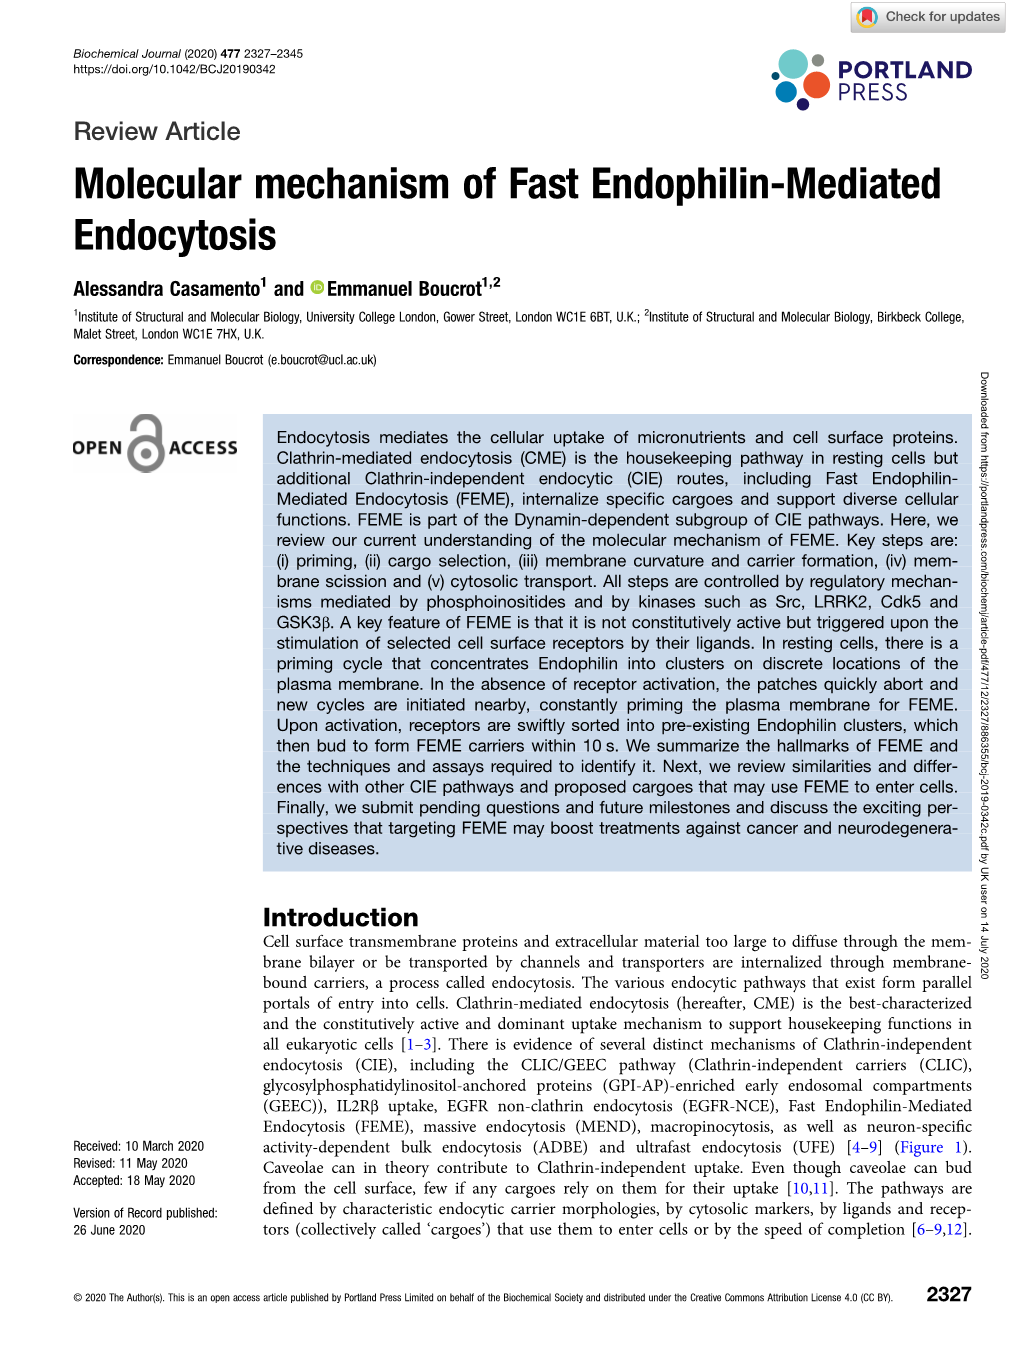 Molecular Mechanism of Fast Endophilin-Mediated Endocytosis